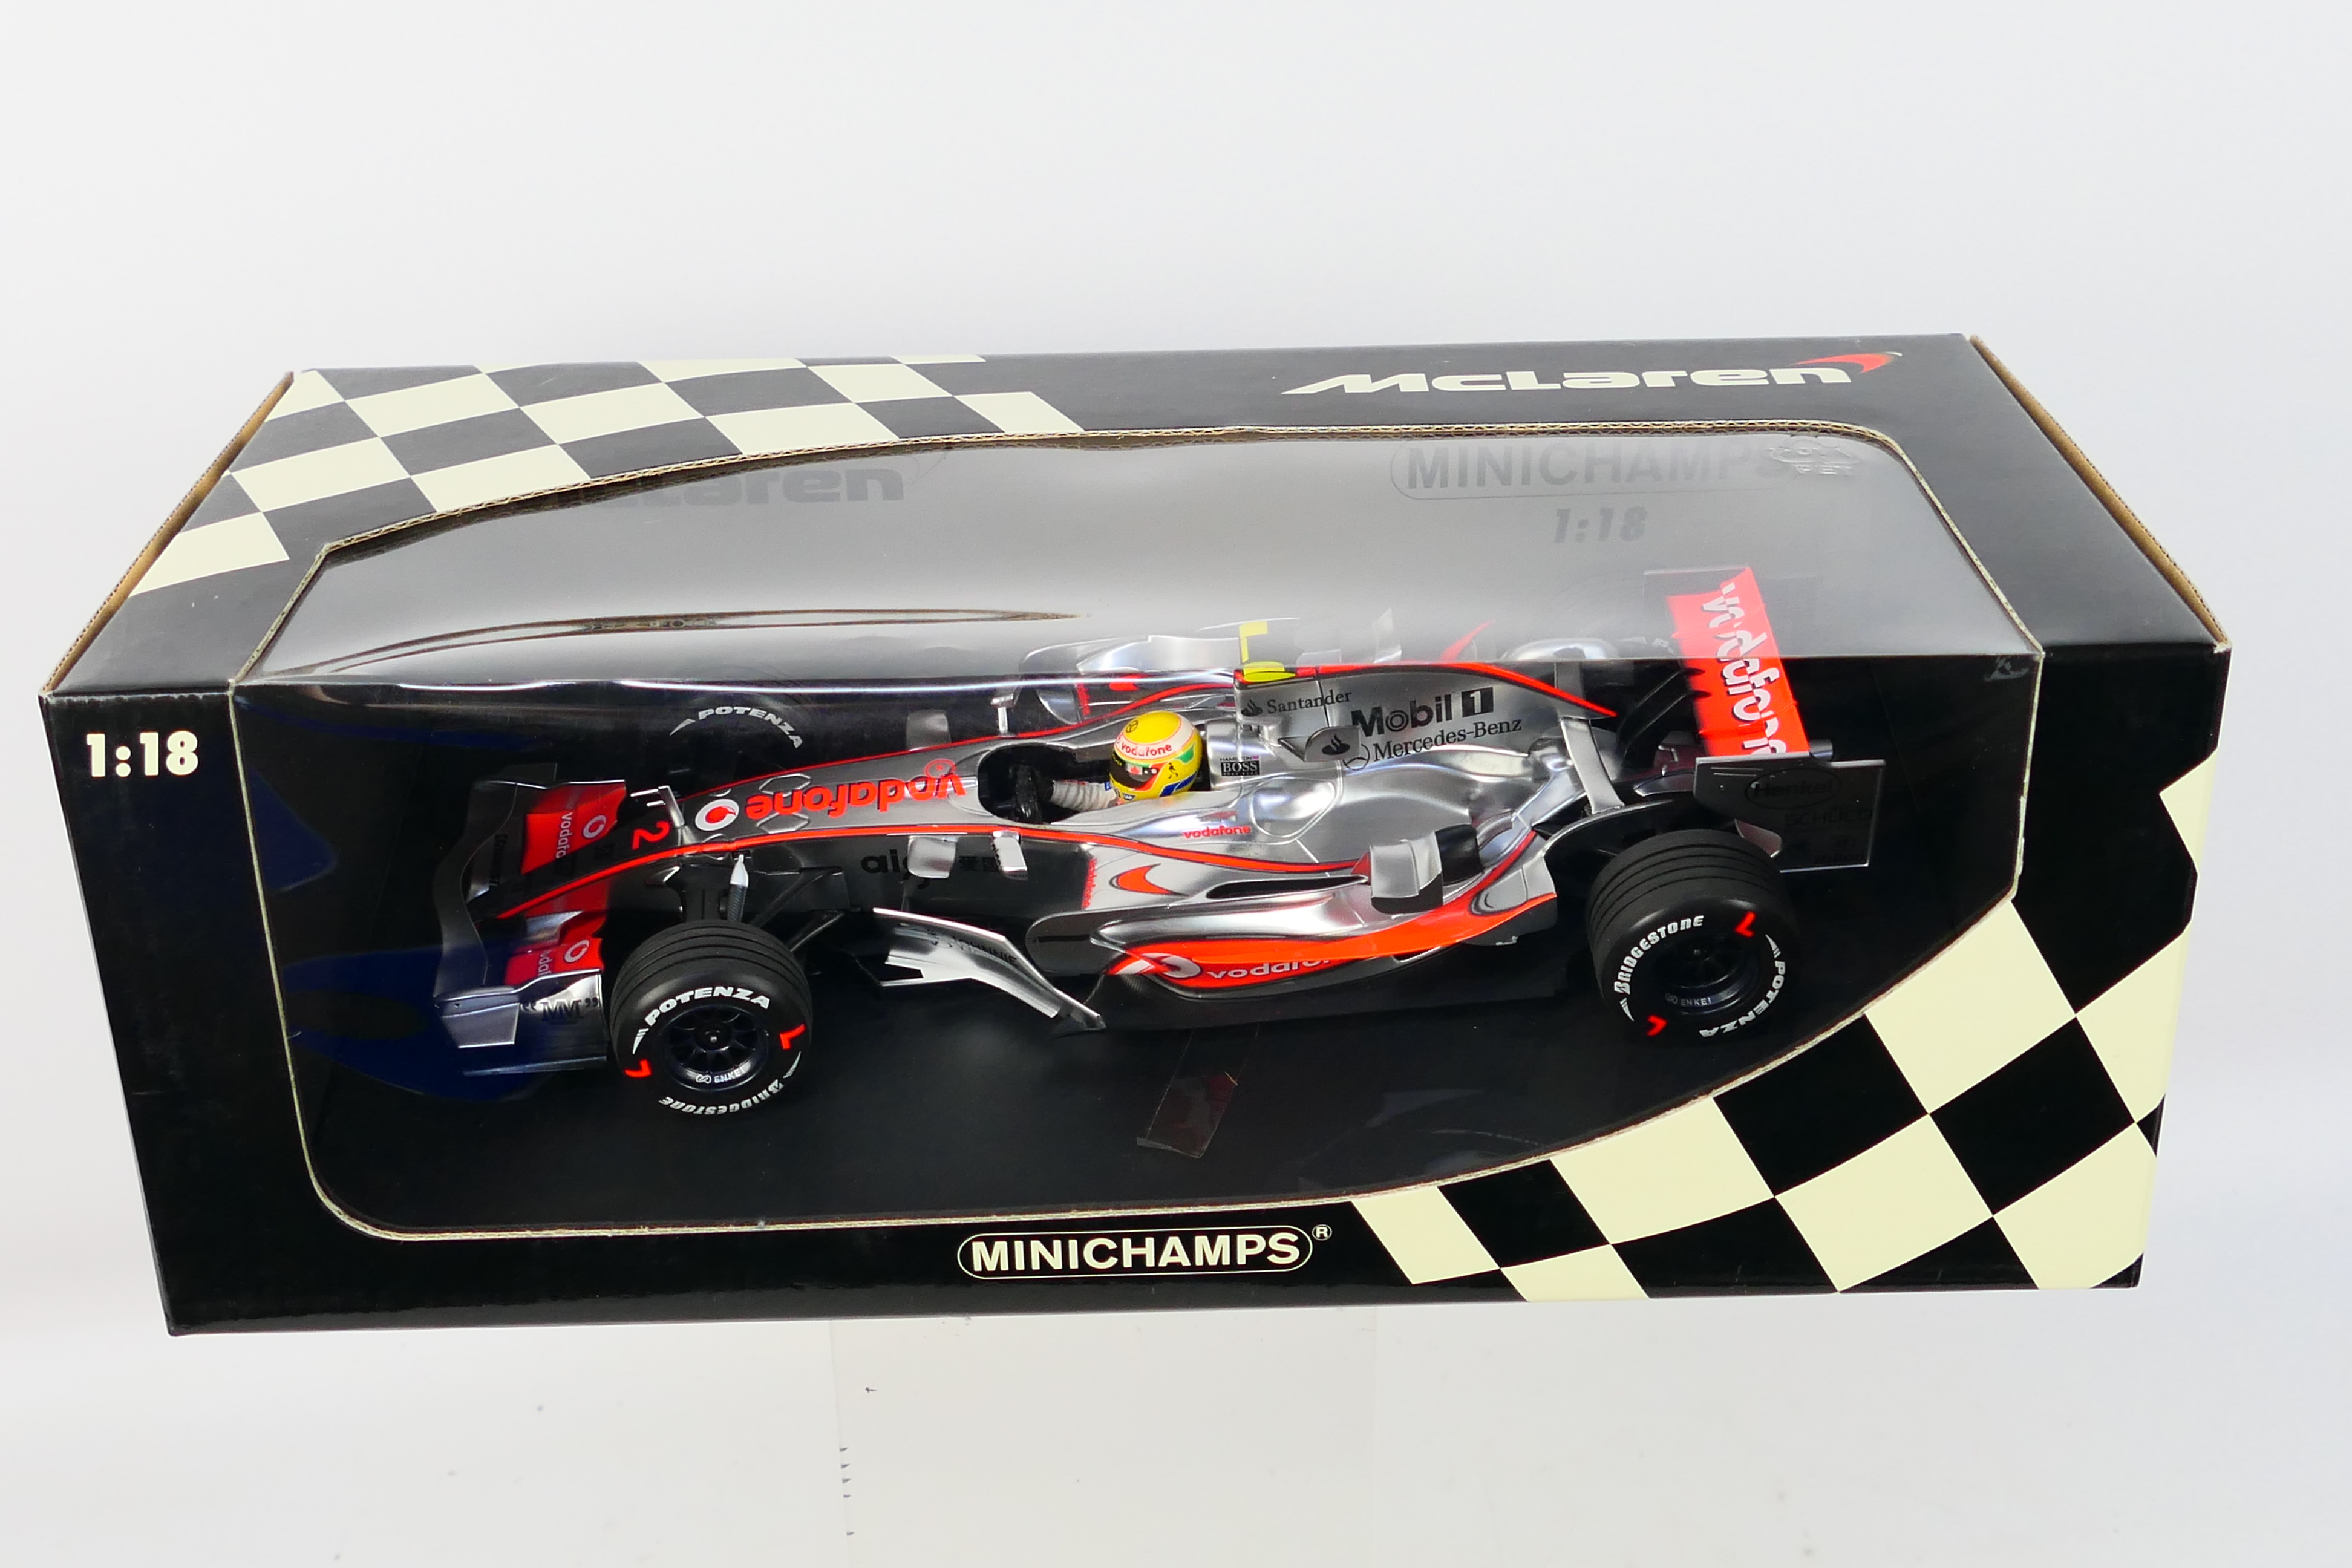 Minichamps - A boxed limited edition 1:18 scale McLaren Mercedes MP4-22 Lewis Hamilton 1st win - Image 3 of 3